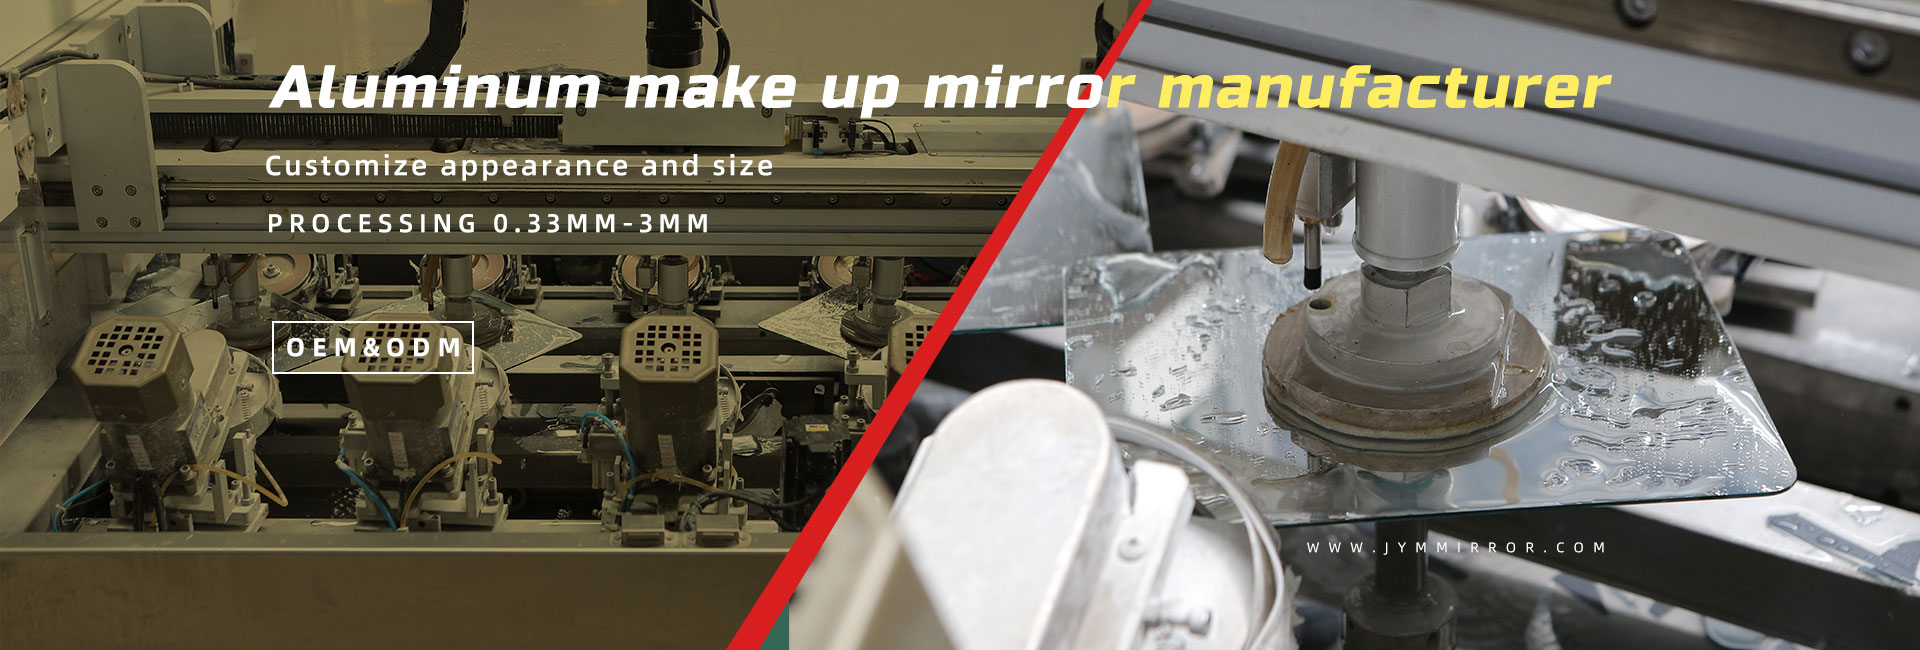 JYM aluminum mirror Manufacturer